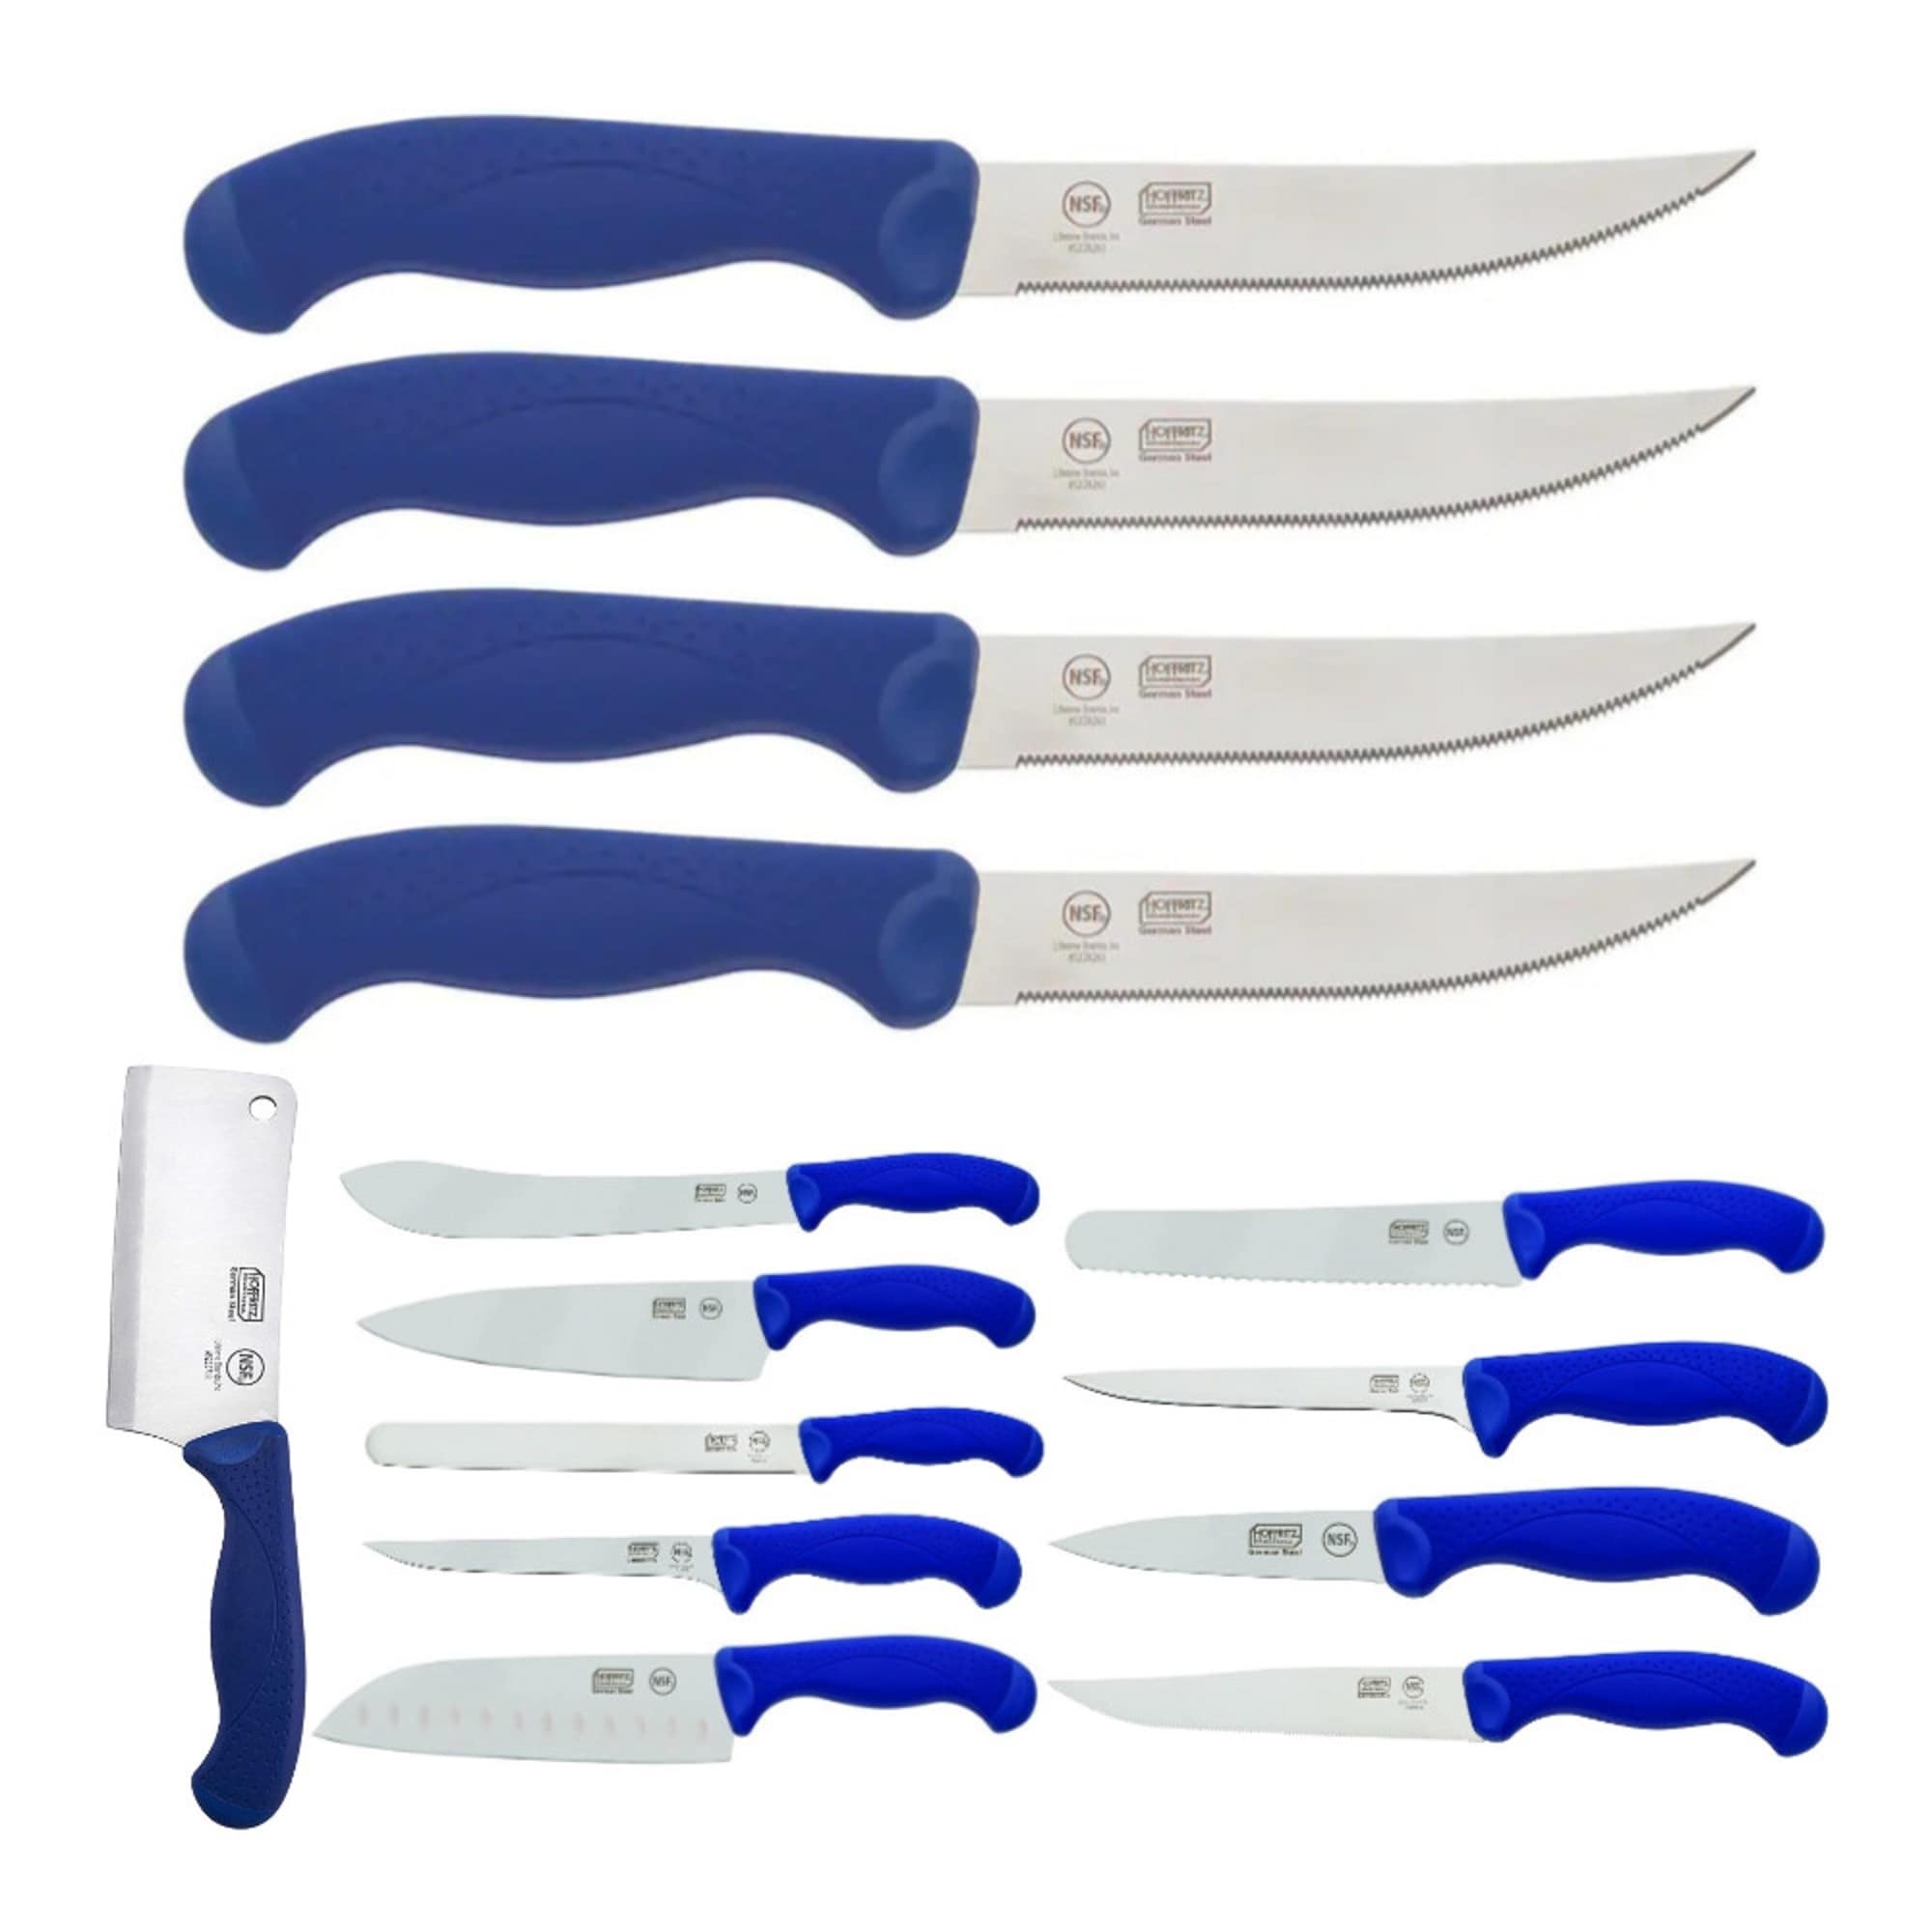 Hoffritz Commercial Mega 14-Piece Knife Set (Navy Blue) - Bed Bath & Beyond  - 31887855